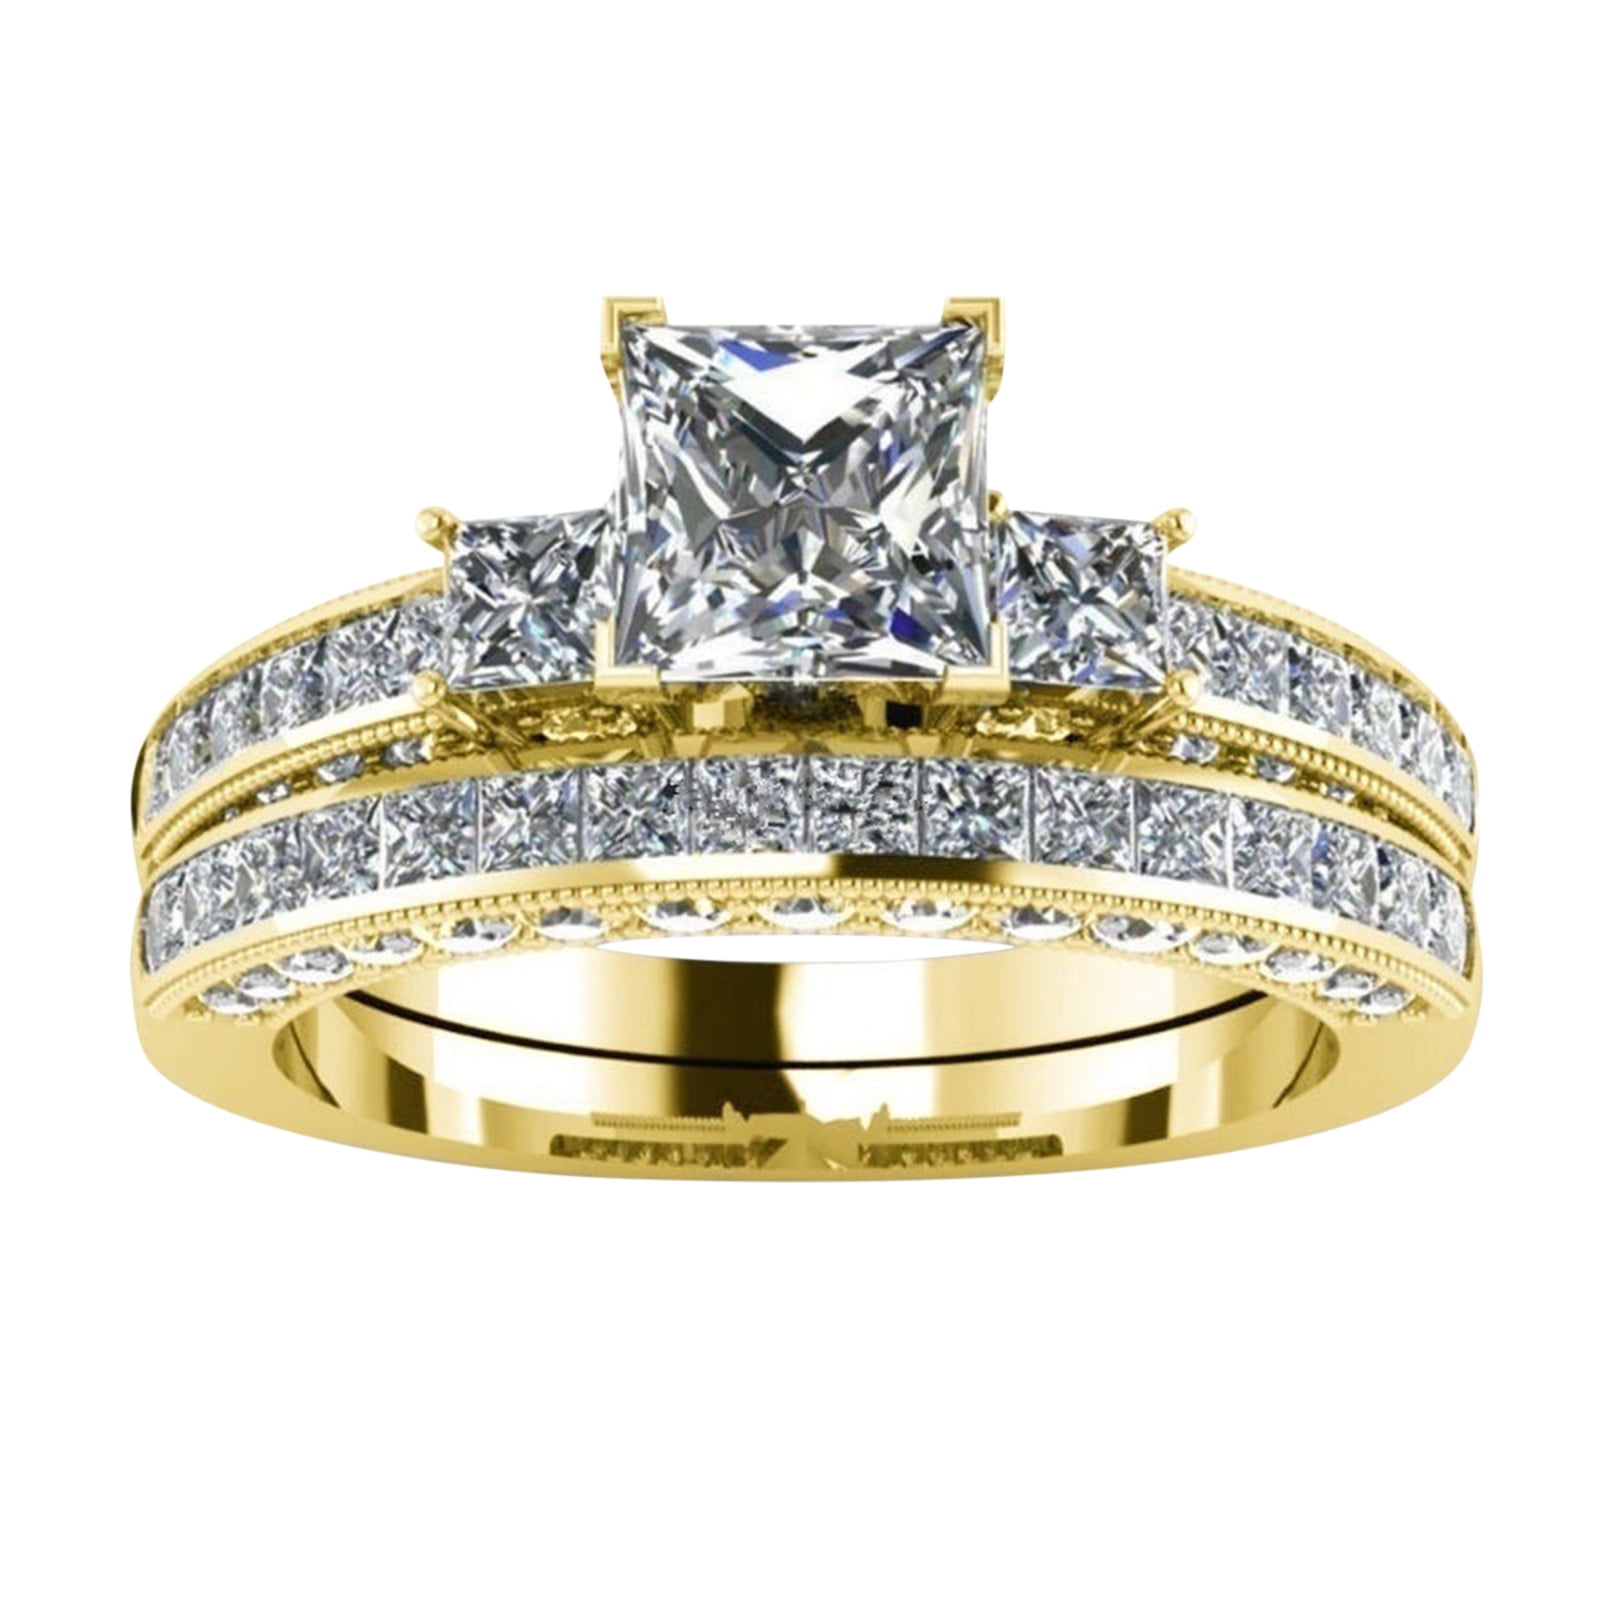 Raffinaderij Maak een sneeuwpop Intrekking Heiheiup Jewelry Ring Ring Pair Ring Women's And Set Diamond American European  Rings Womens Rings Size 7 - Walmart.com